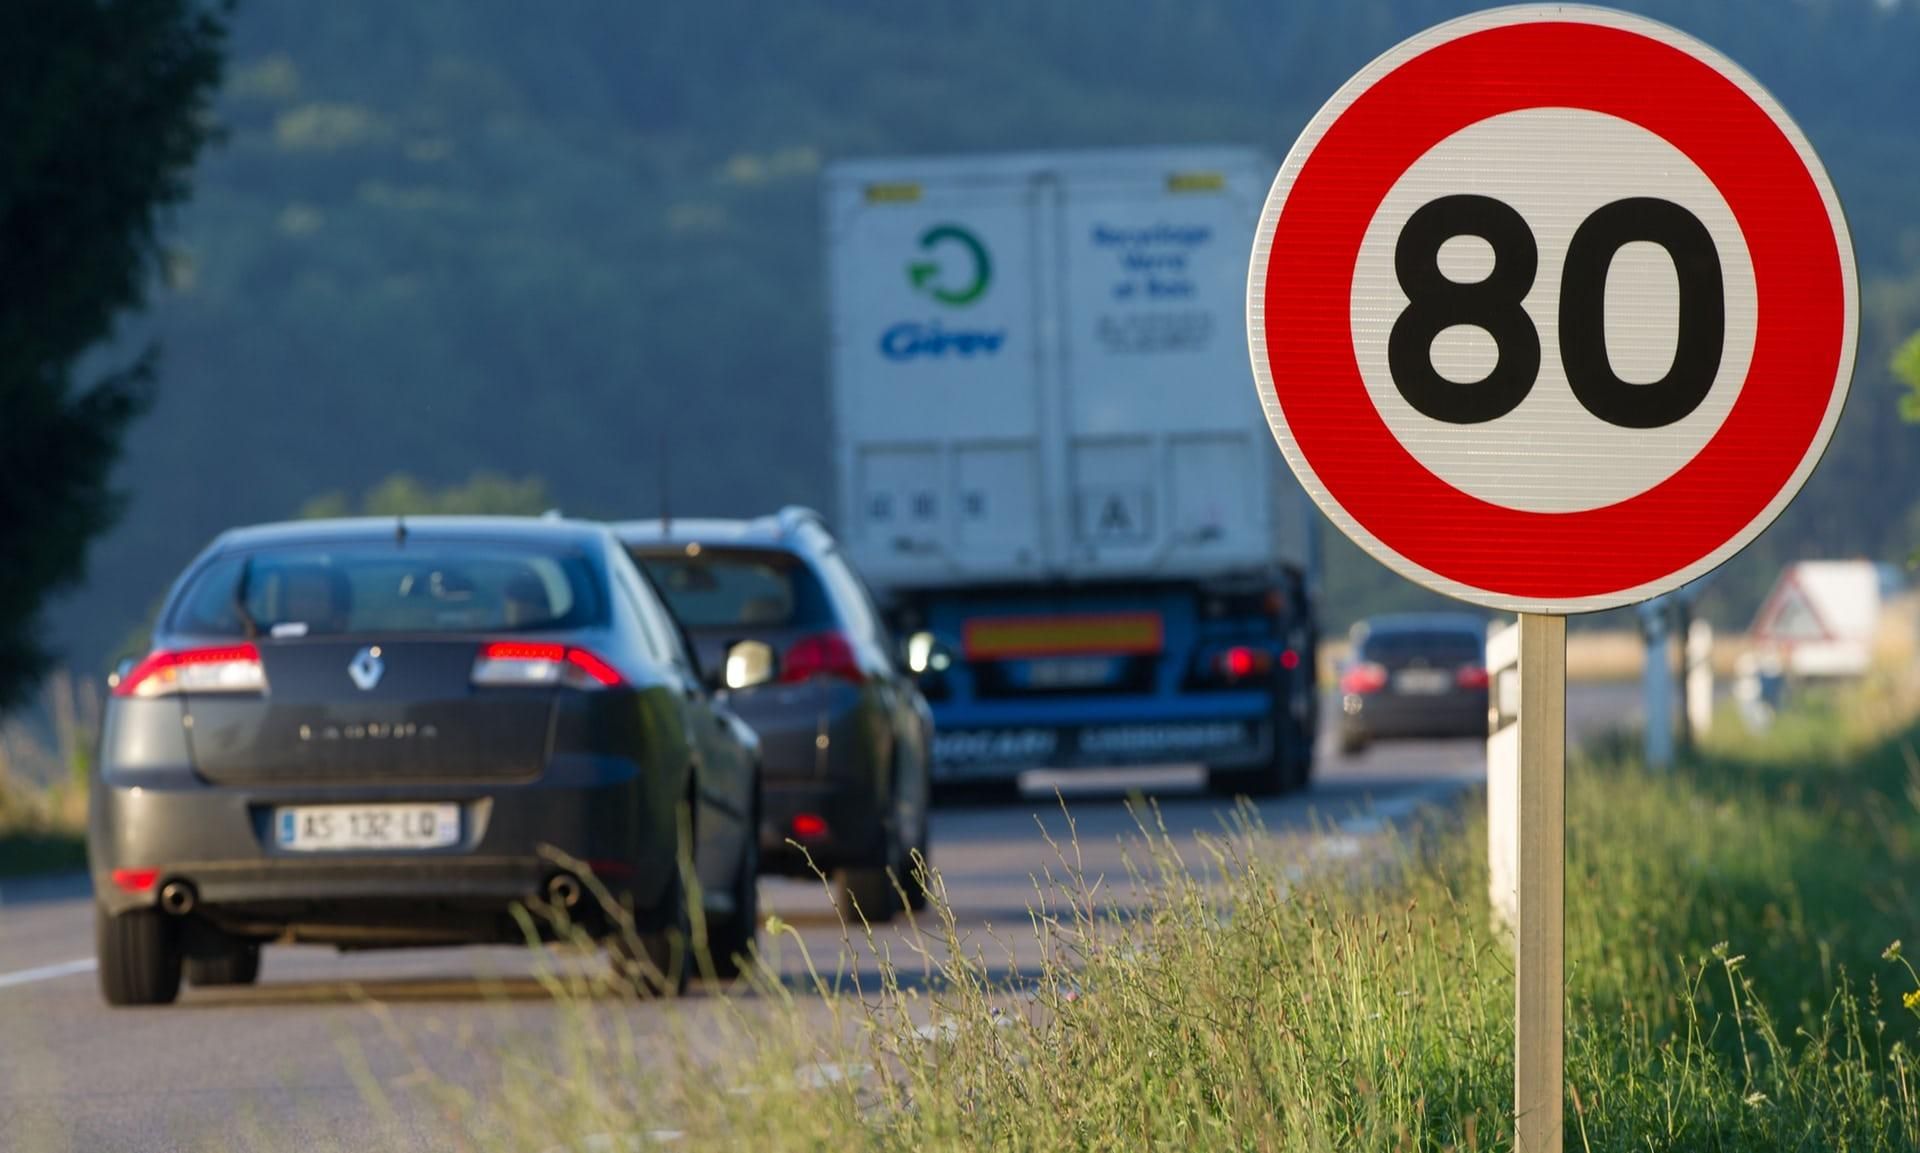 Ще одна європейська країна знизила максимальну швидкість на дорогах